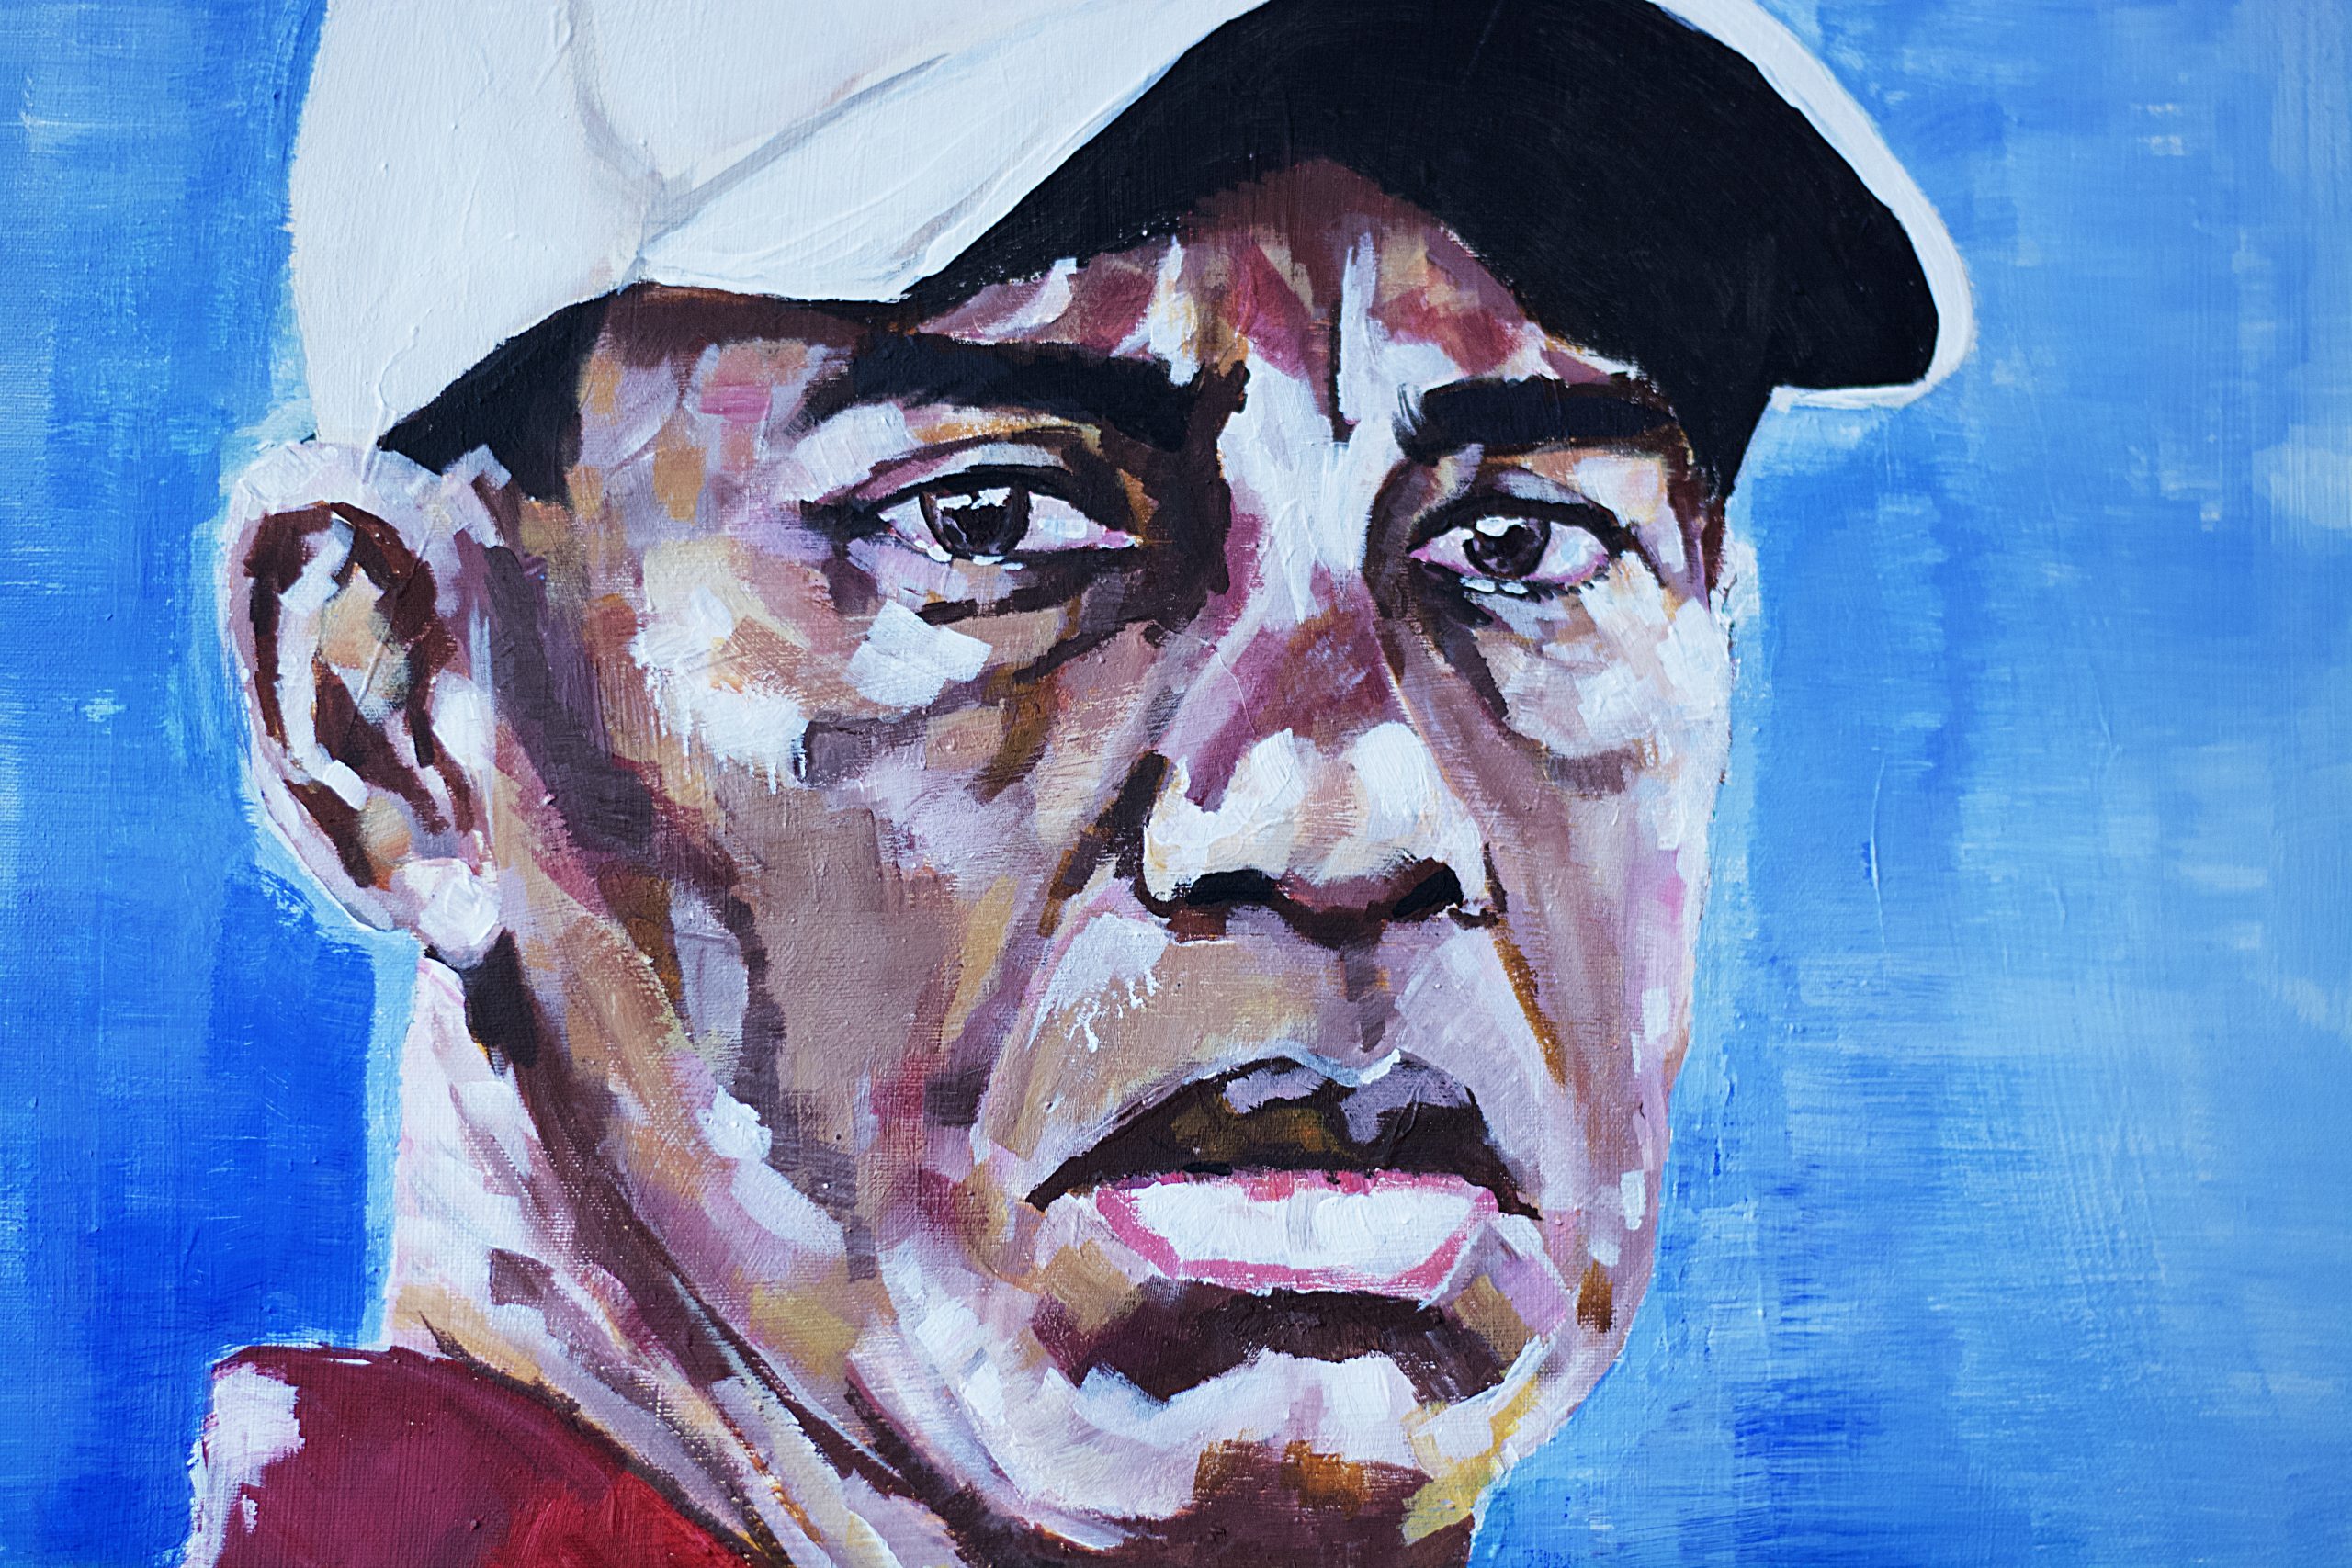 uk artist commission portrait of Tiger Woods golf player